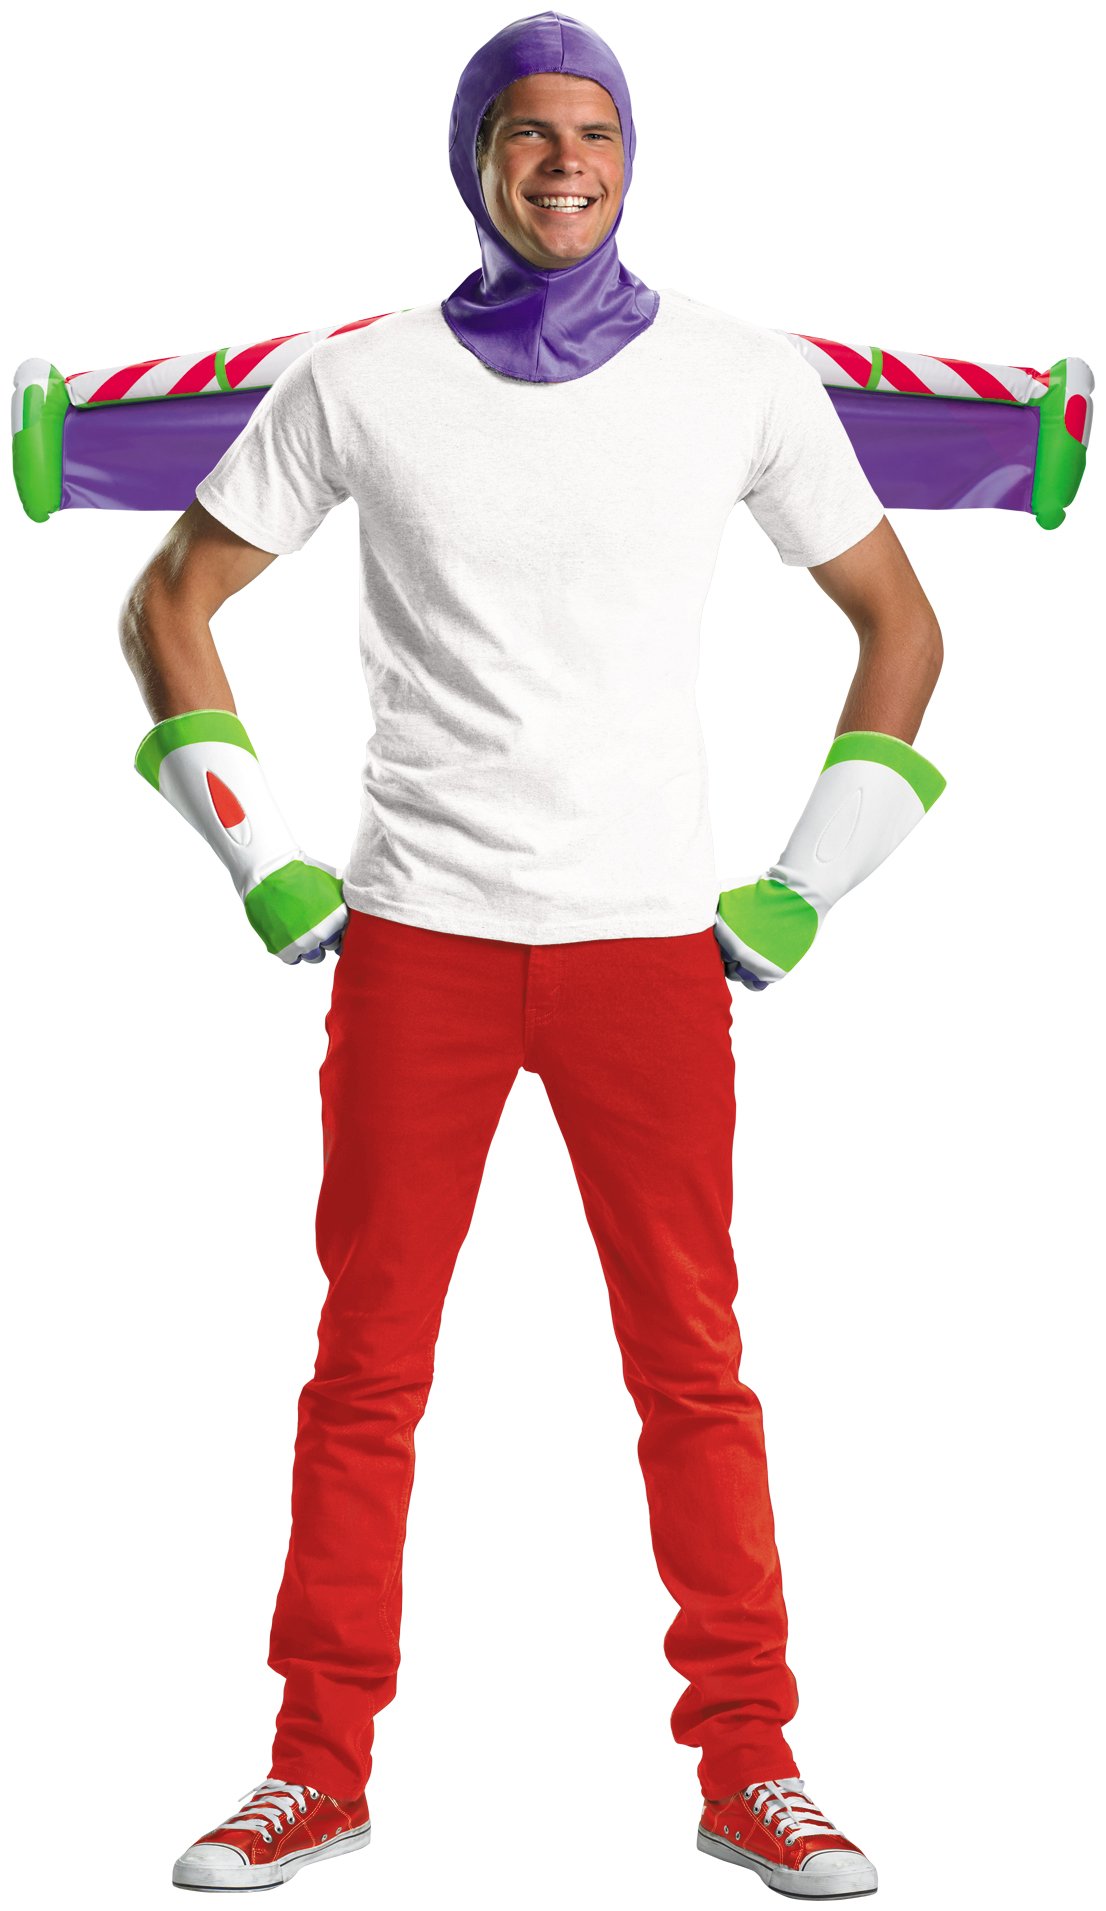 Toy Story - Buzz Lightyear Adult Costume Kit